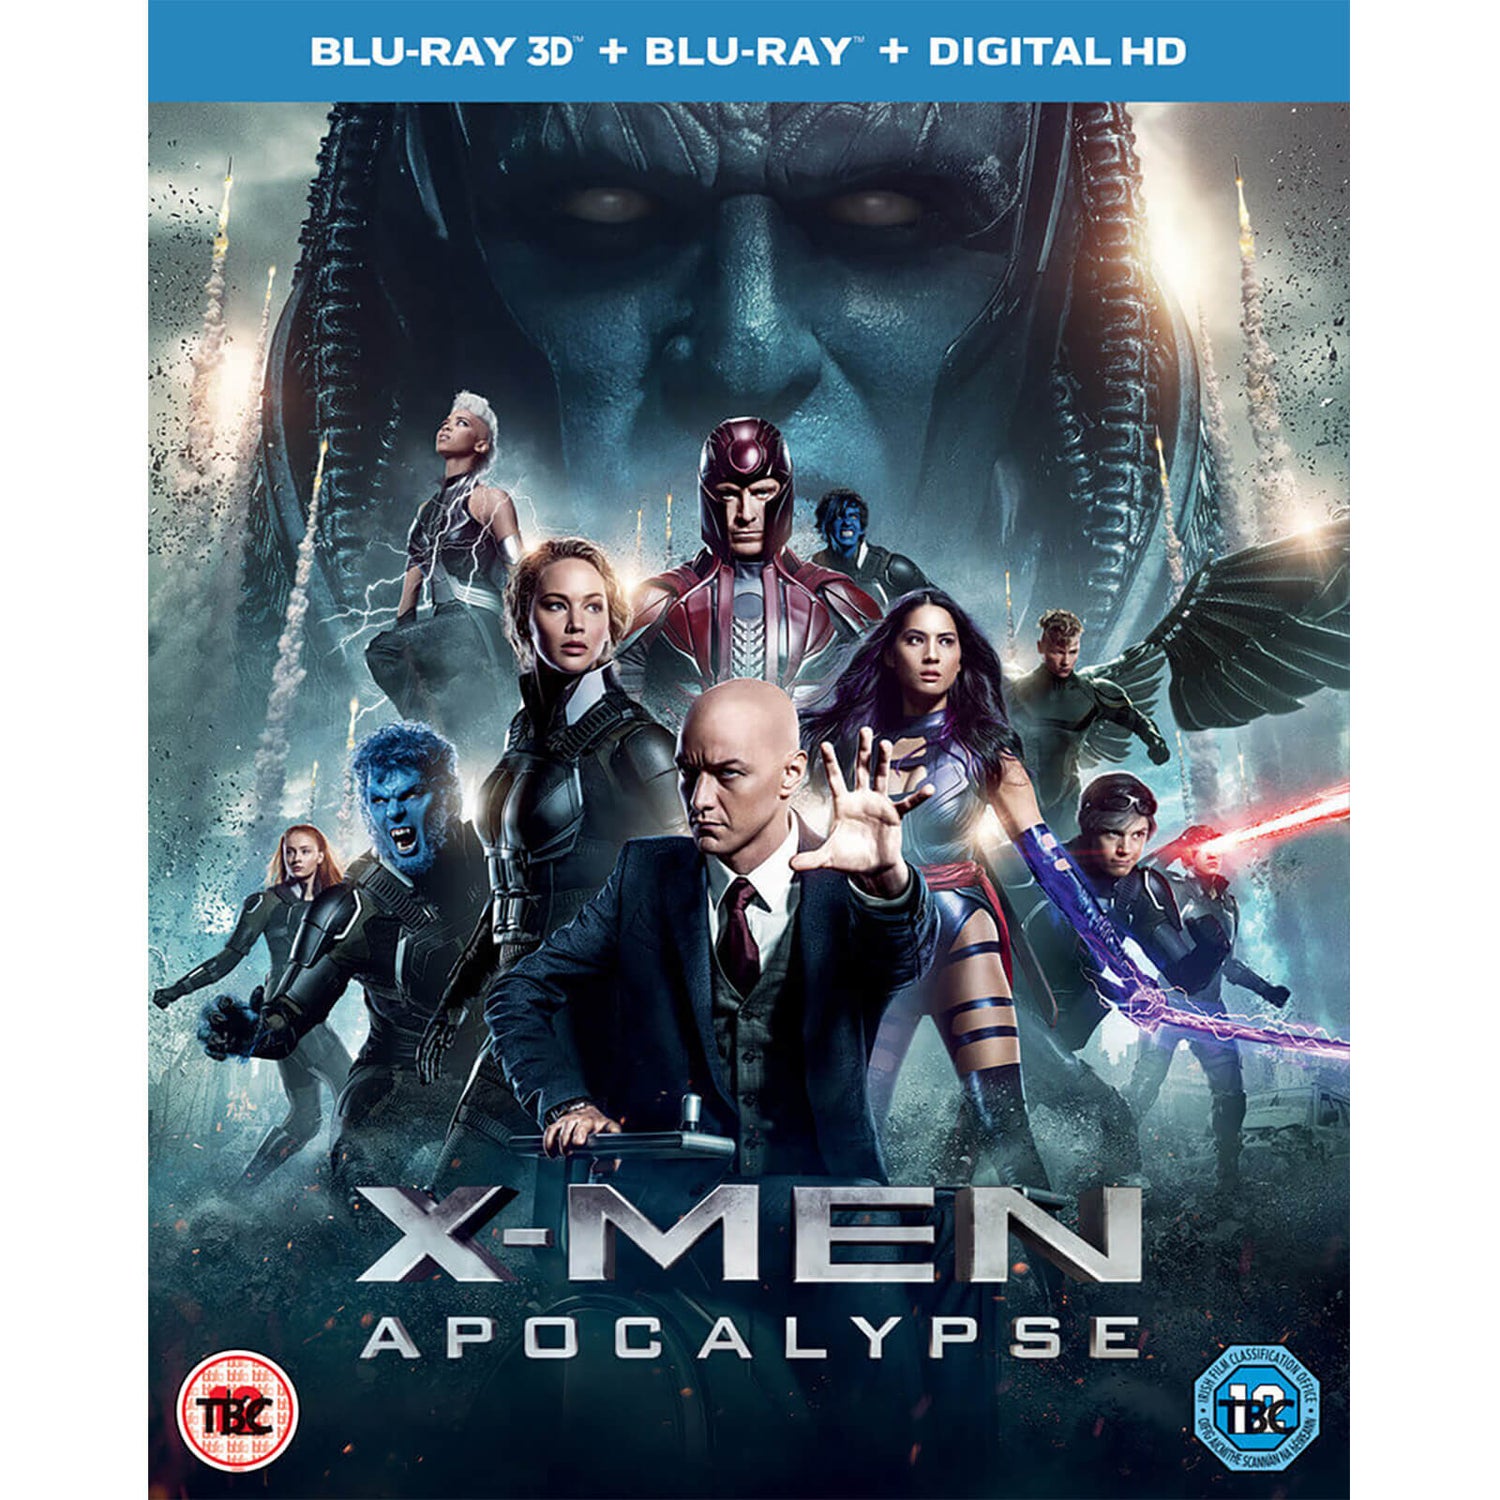 The New Mutants Blu-ray (Blu-ray + Digital HD)